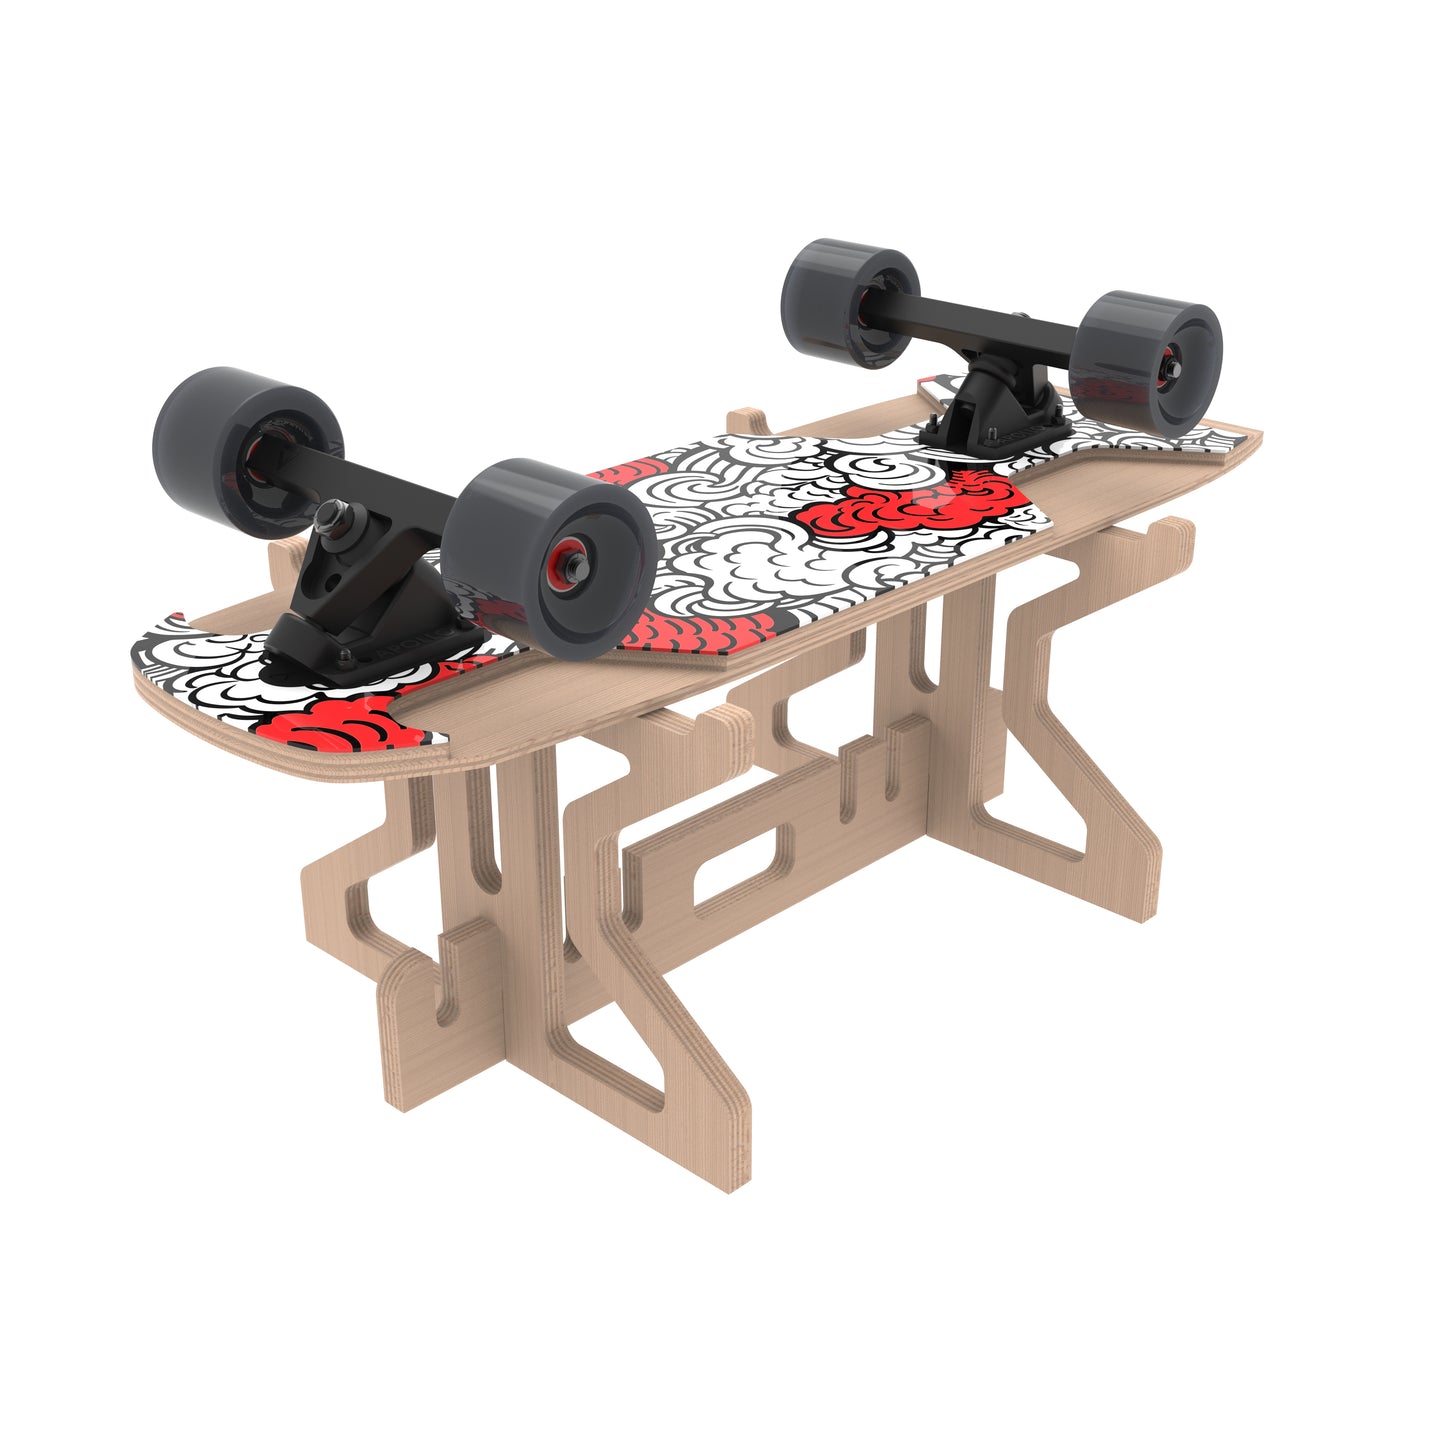 Skateboard and Longboard Workbench - Fits any size board